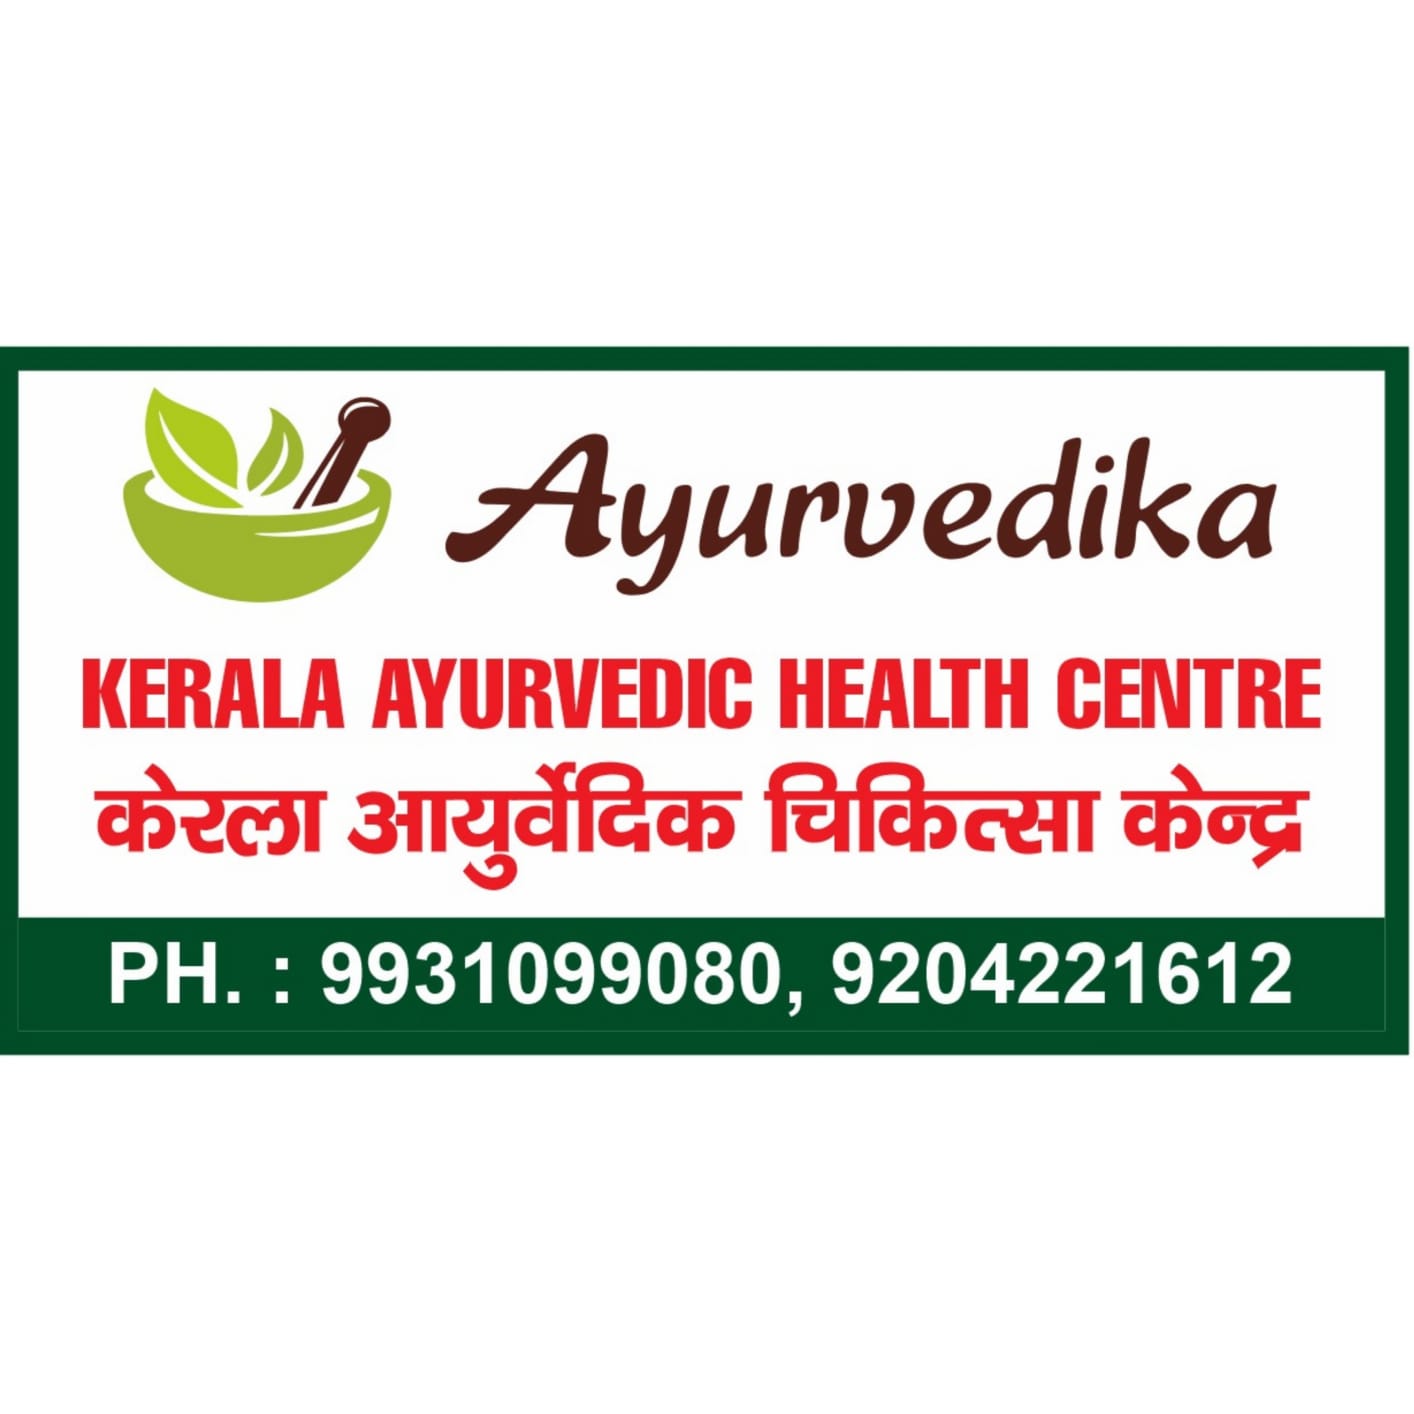 AYURVEDIKA Kerala Ayurvedic Health Center